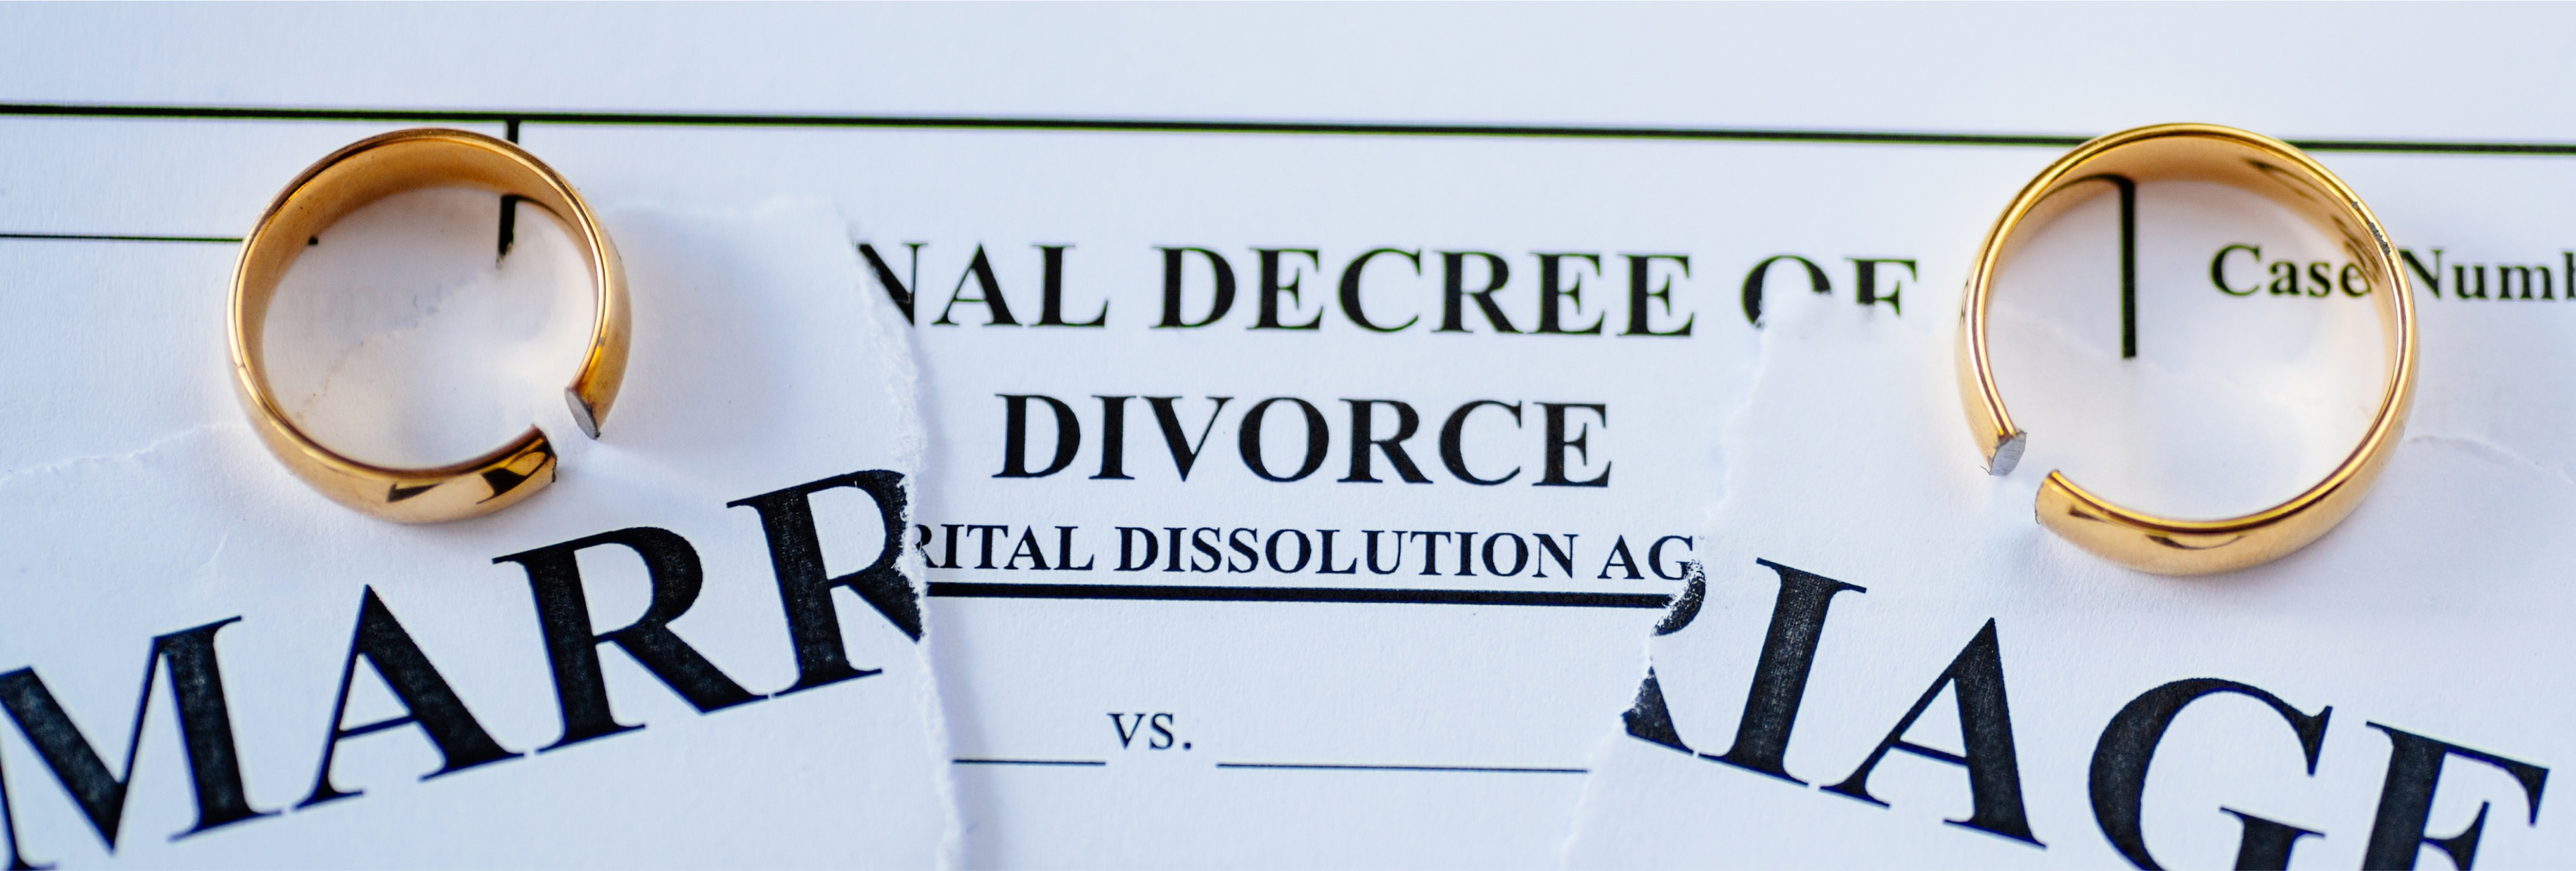 Divorce decree and two broken wedding rings